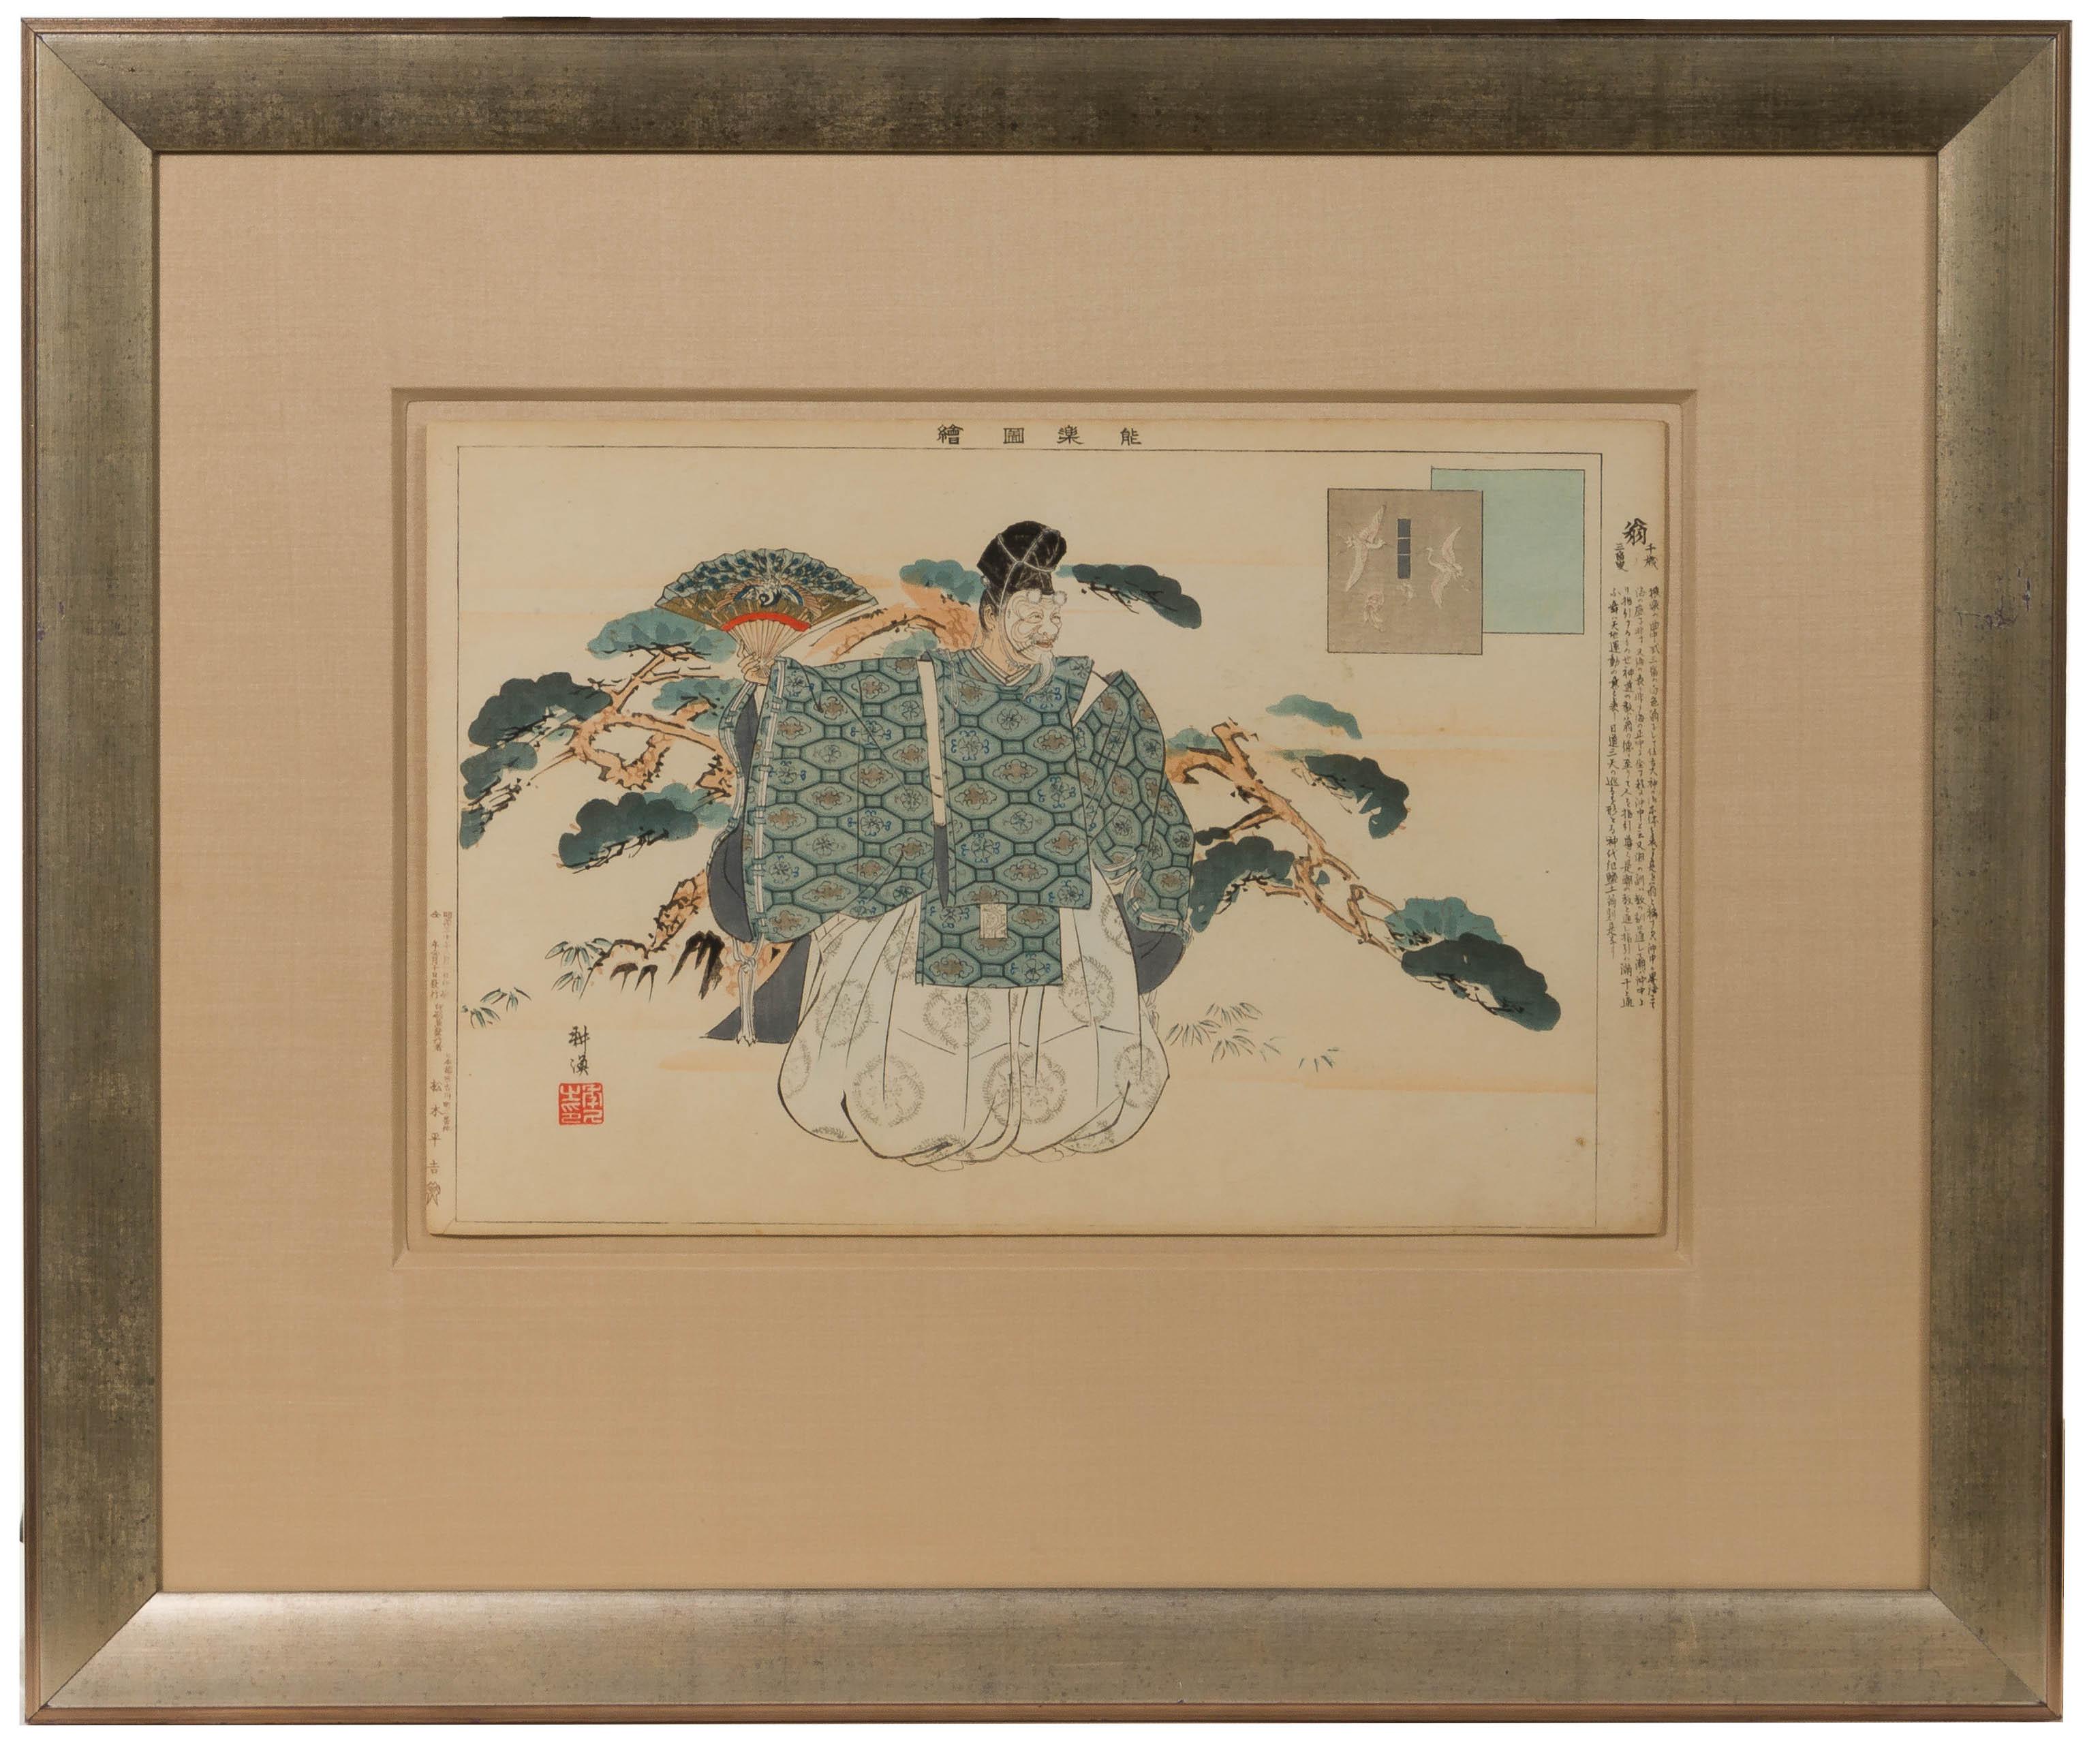 Tsukioka Kogyo (Japanese, 1869-1927) Woodblock Print Assortment